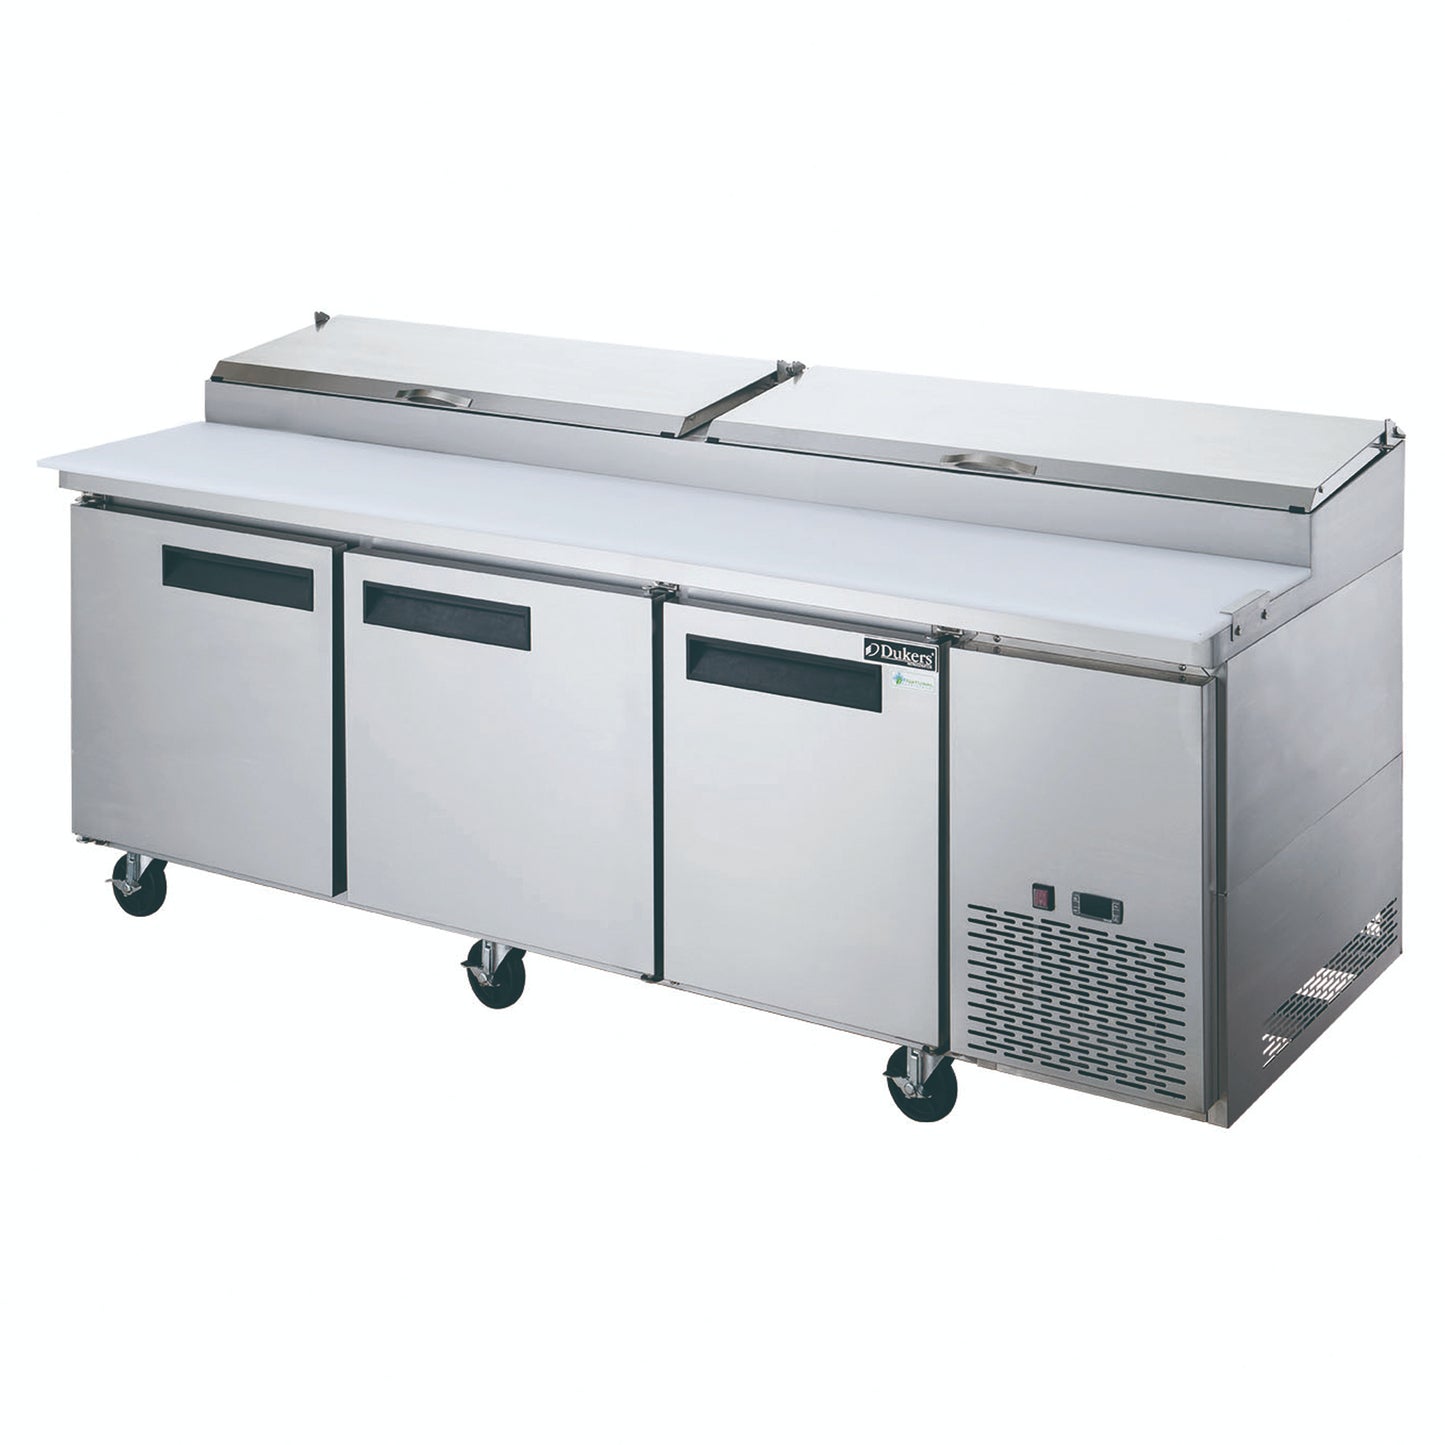 Dukers - DPP90-12-S3, Commercial 90" 3 Door Pizza Prep Table Refrigerator